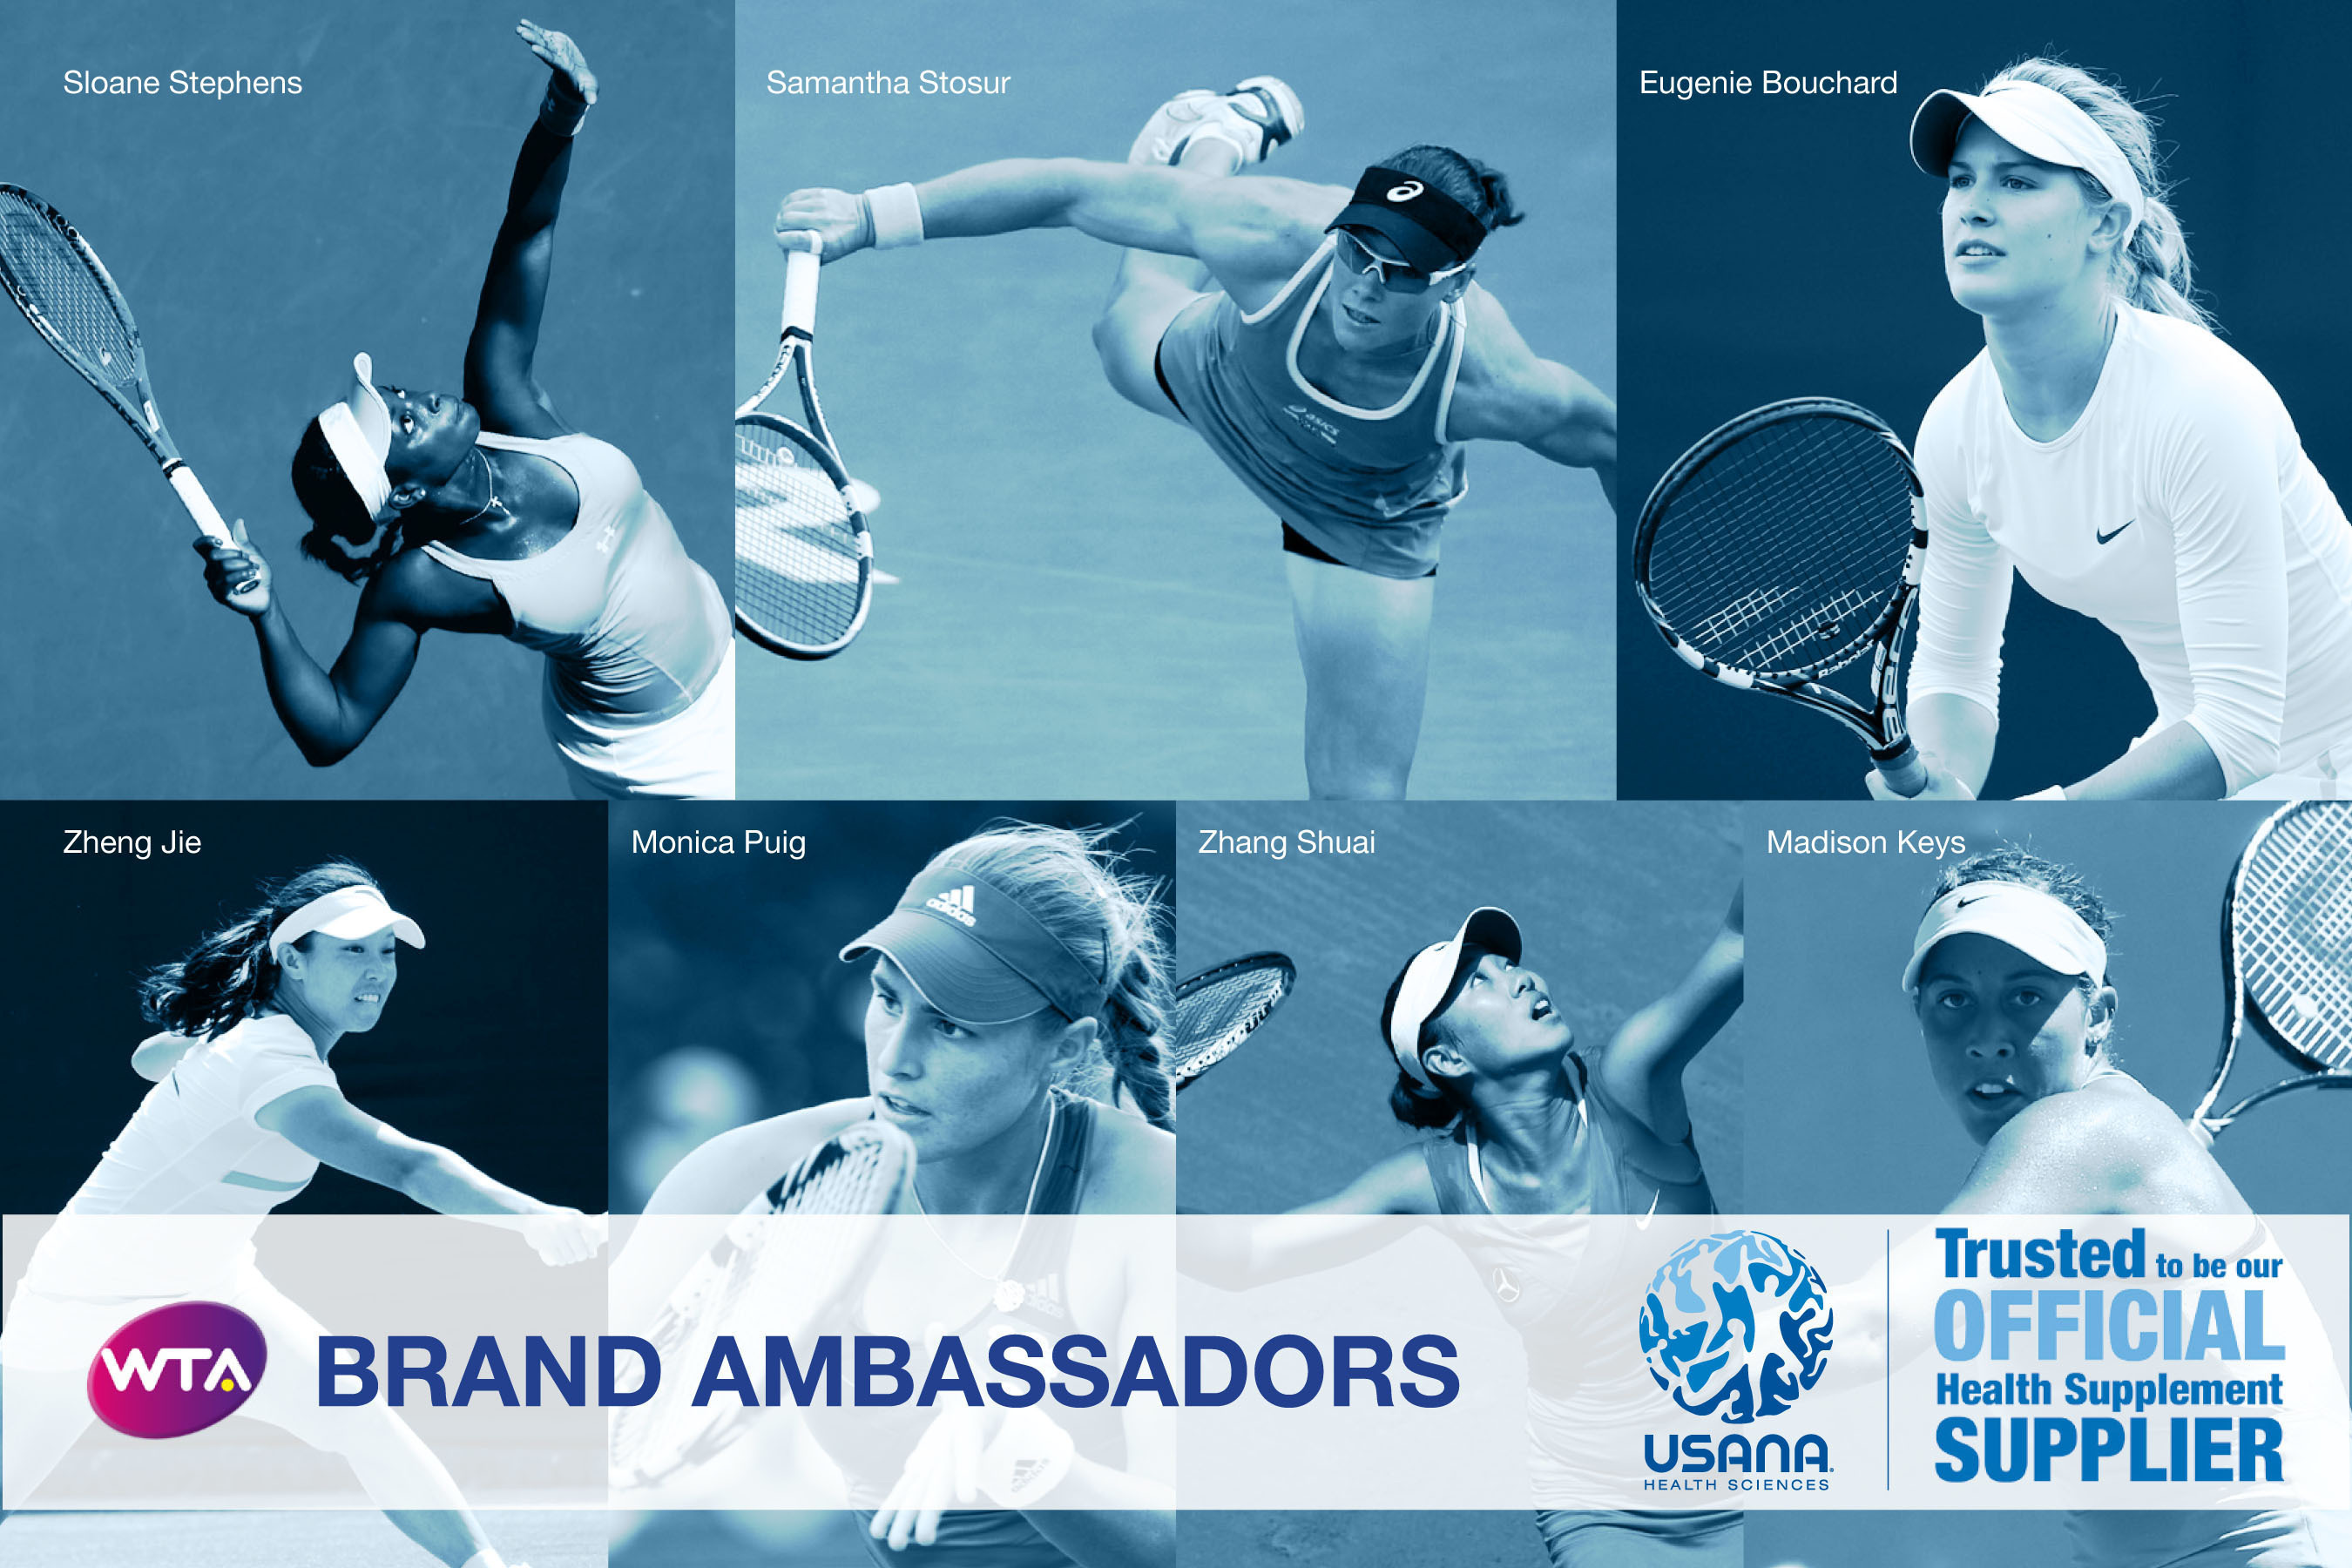 USANA's WTA Brand Ambassadors. (PRNewsFoto/USANA Health Sciences, Inc.) (PRNewsFoto/USANA HEALTH SCIENCES, INC.)